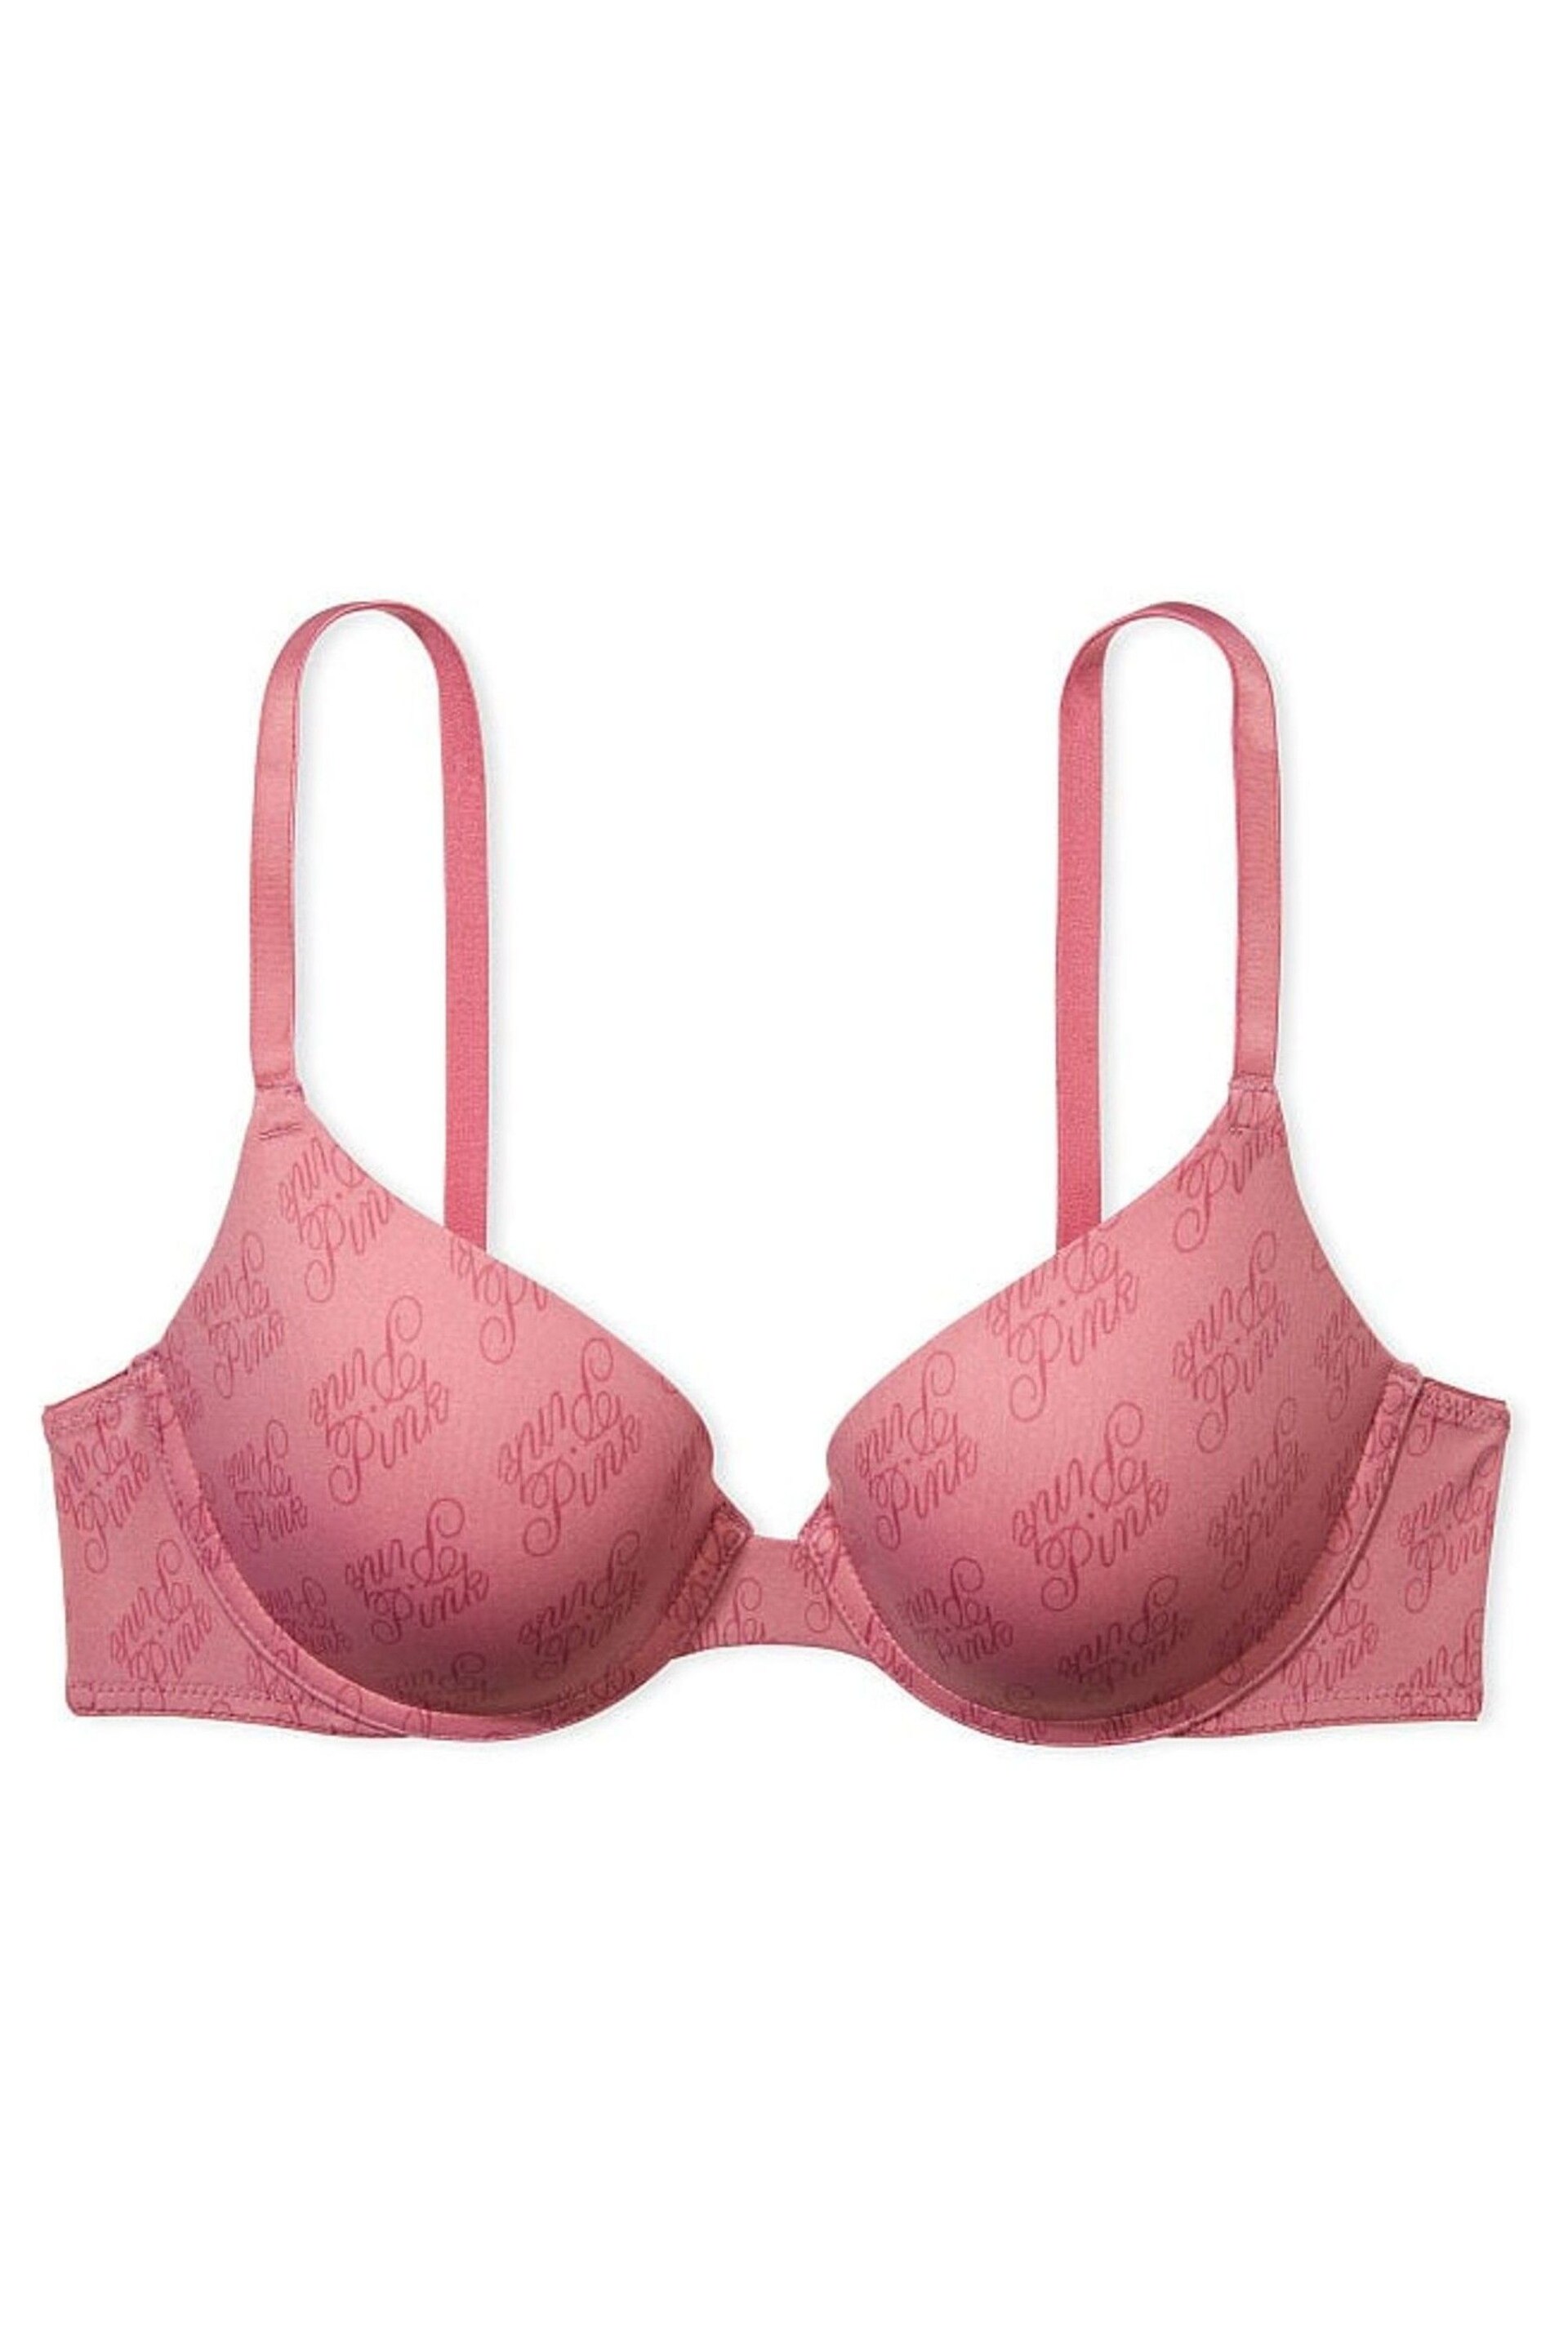 Victoria's Secret PINK Soft Begonia Pink Script Push Up Bra - Image 4 of 4